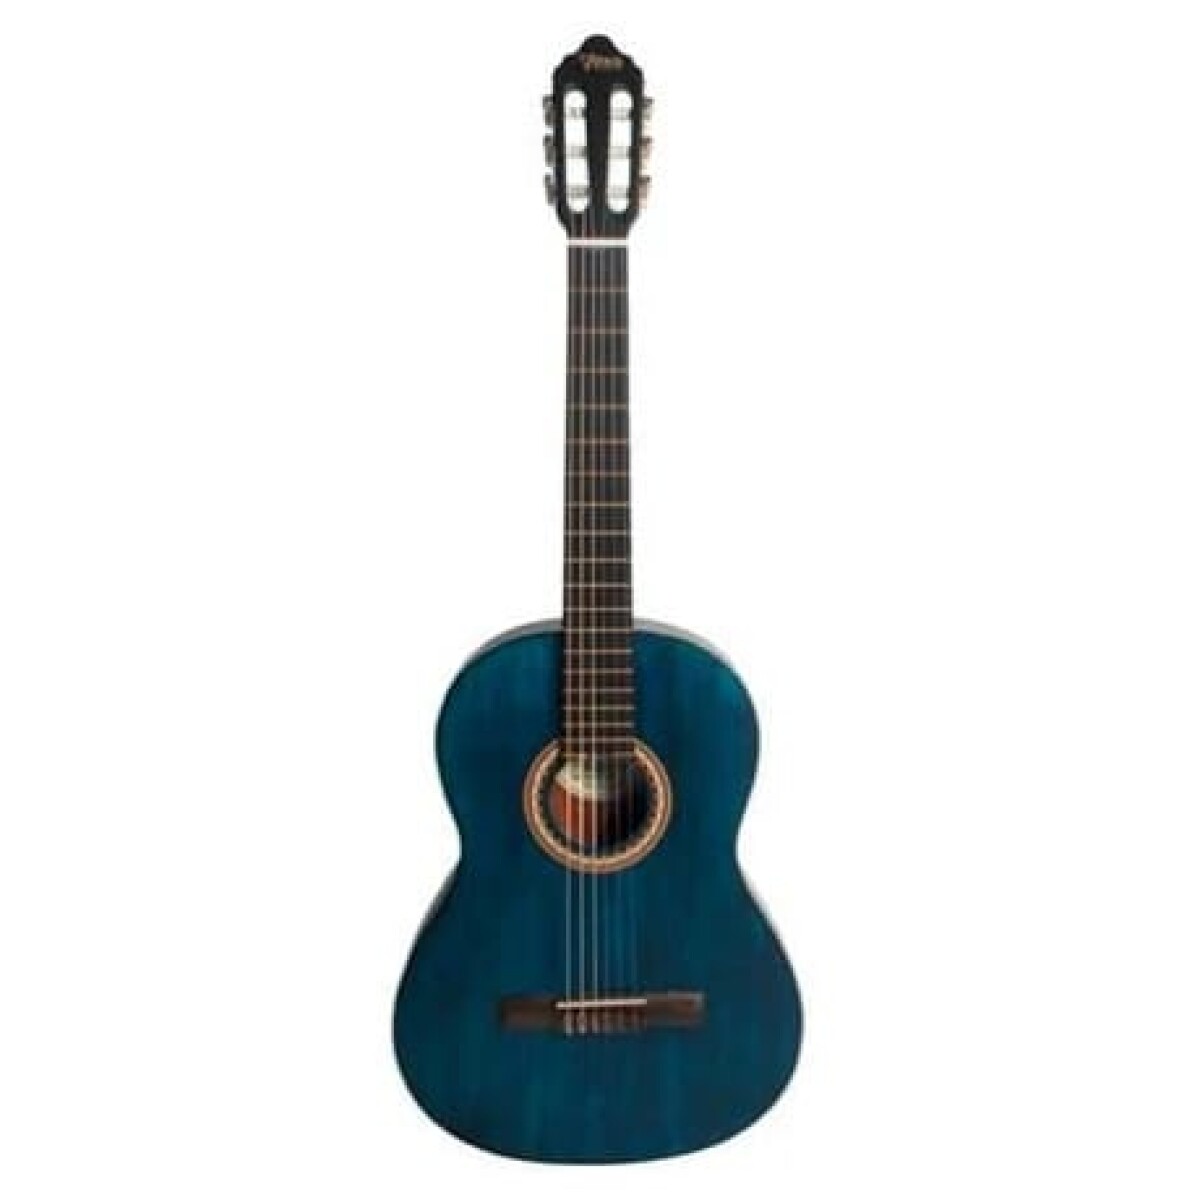 Valencia guitarra clásica 3/4 azul - VC203TBU 